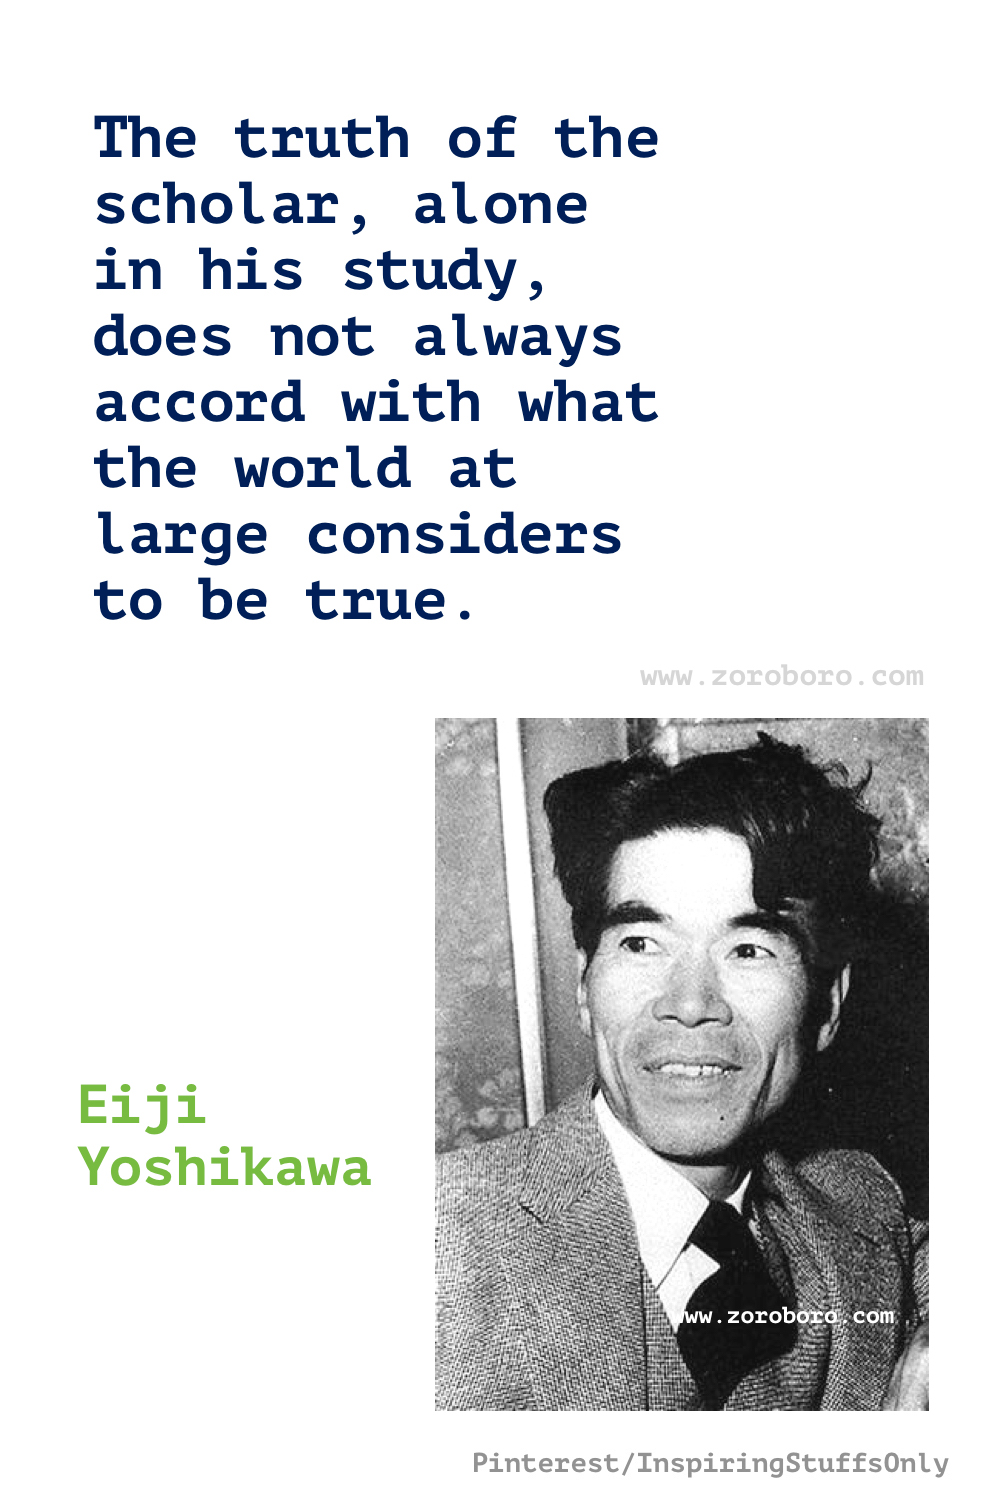 Eiji Yoshikawa Quotes. Eiji Yoshikawa Books Quotes, Musashi Quotes, Taiko: An Epic Novel of War and Glory in Feudal Japan Quotes. Eiji Yoshikawa Novel Quotes, Eiji Yoshikawa Novel Quotes, Eiji Yoshikawa - Musashi: An Epic Novel of the Samurai Era Quotes.